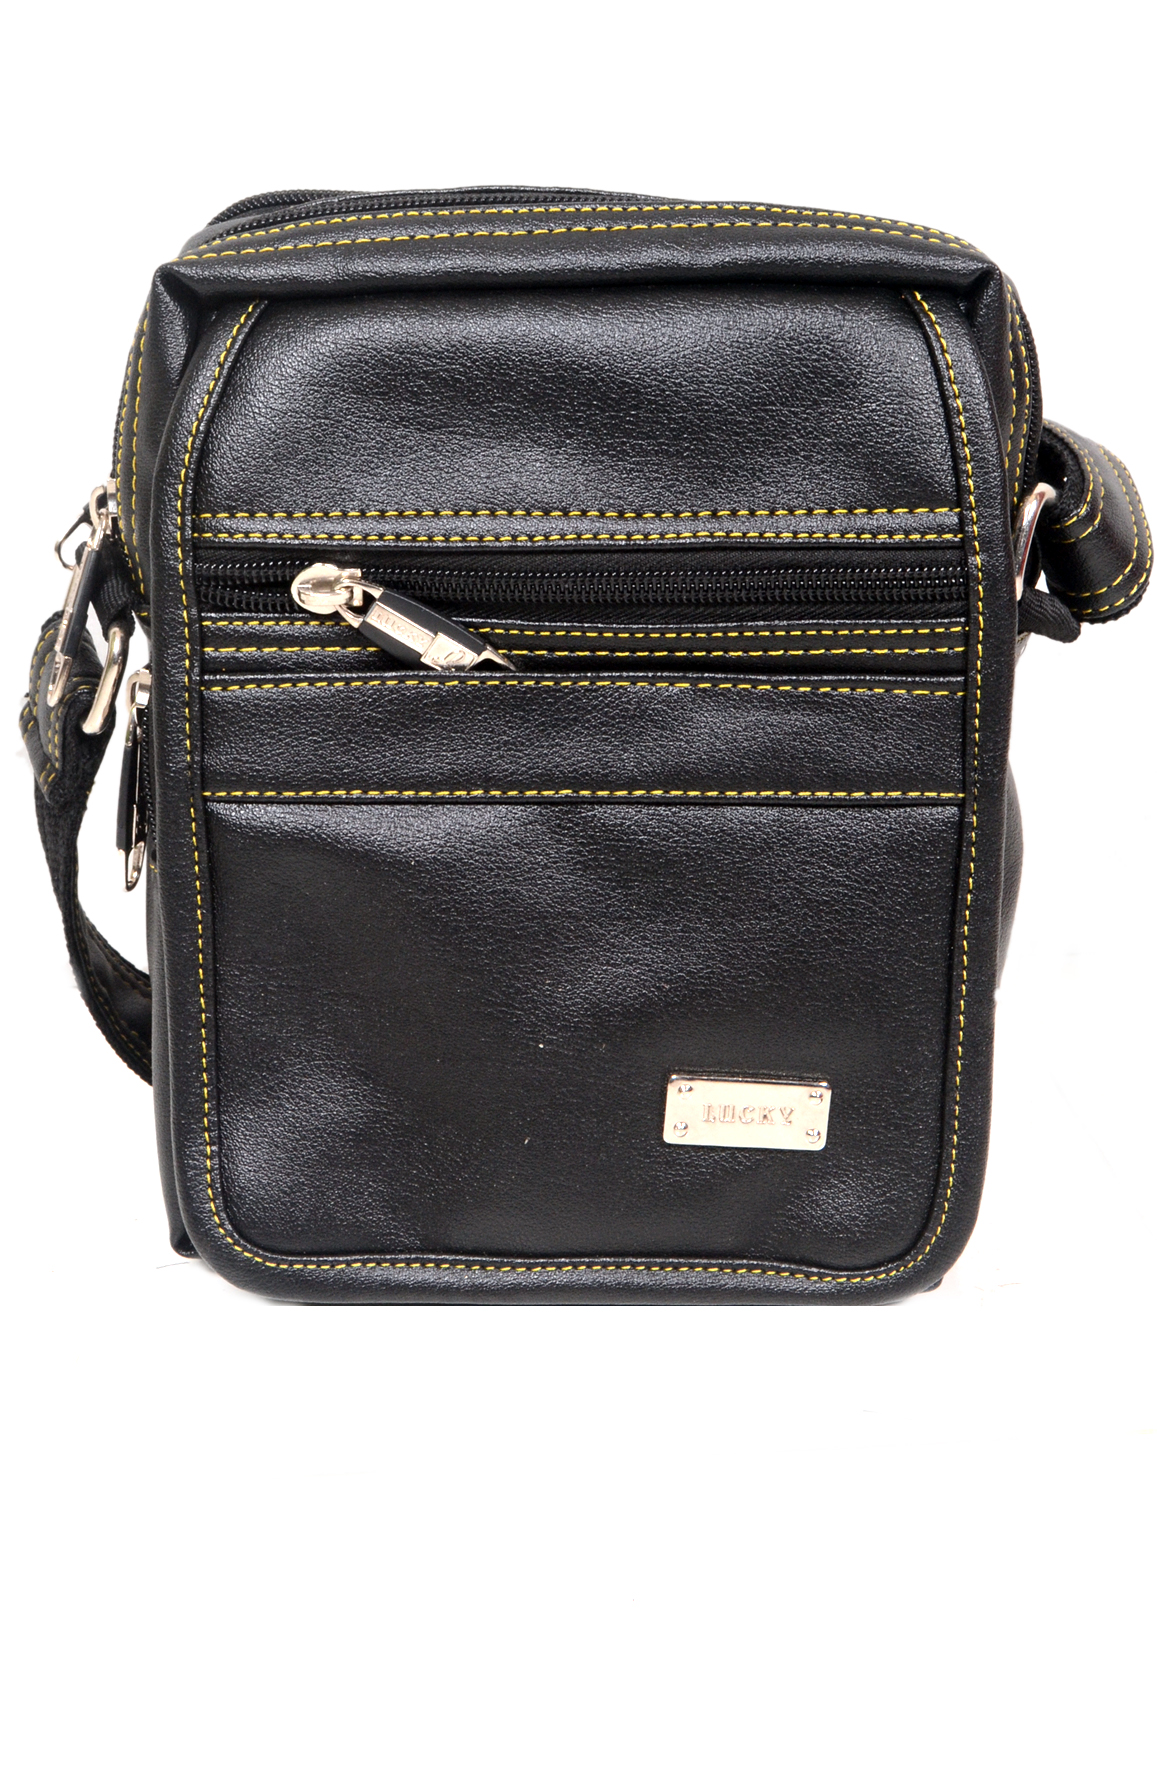 Black GD Bag - Accessories By Mascot | Flutterwave Store